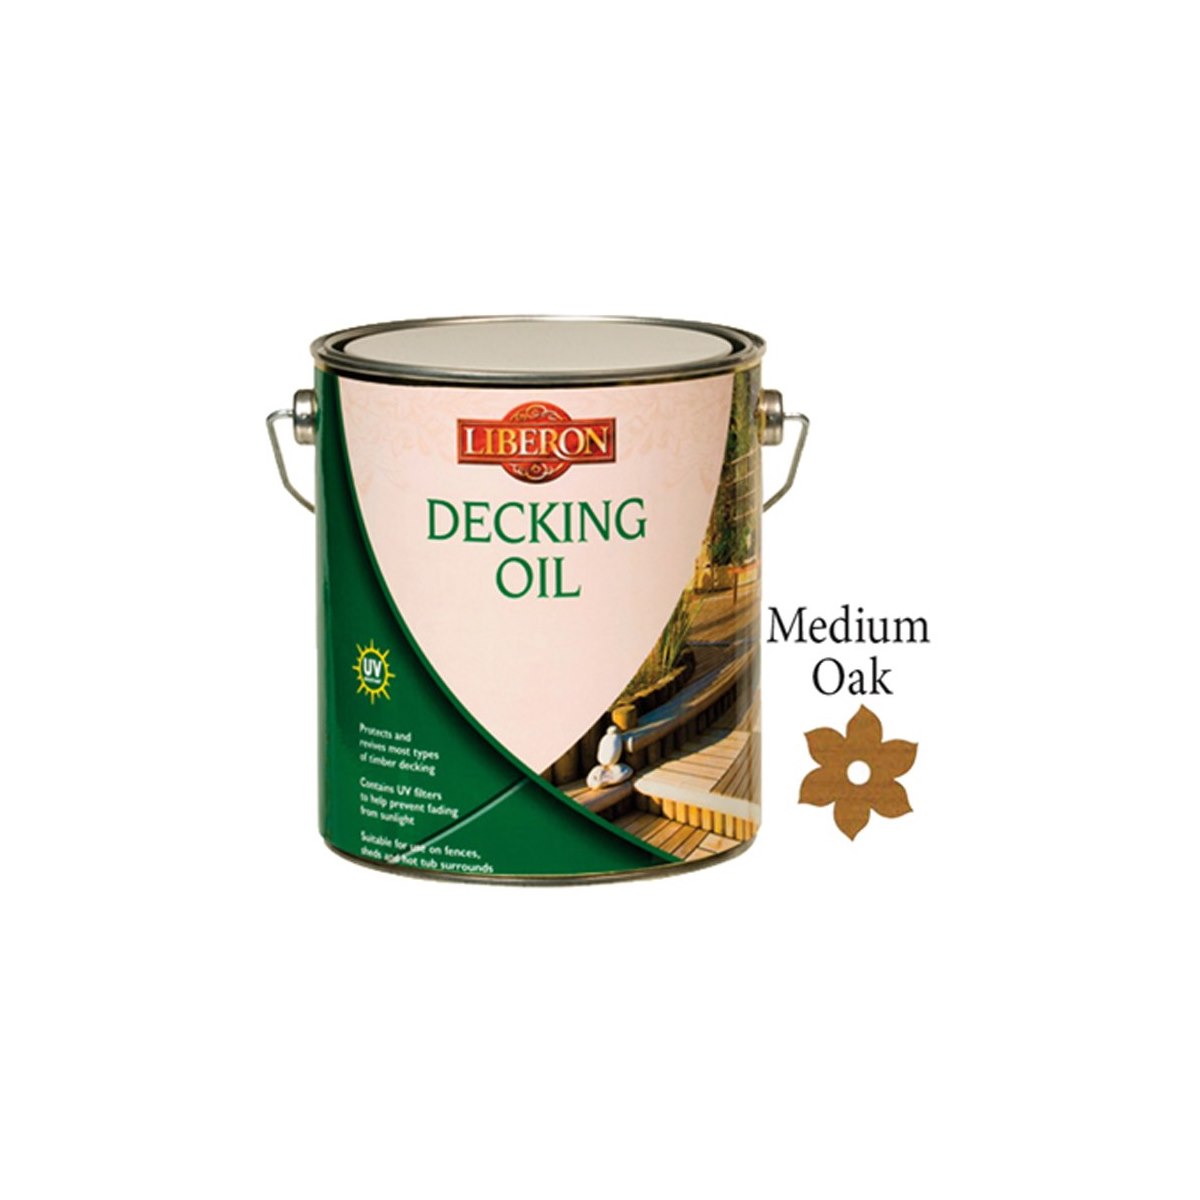 Liberon Decking Oil Medium Oak 5 Litre